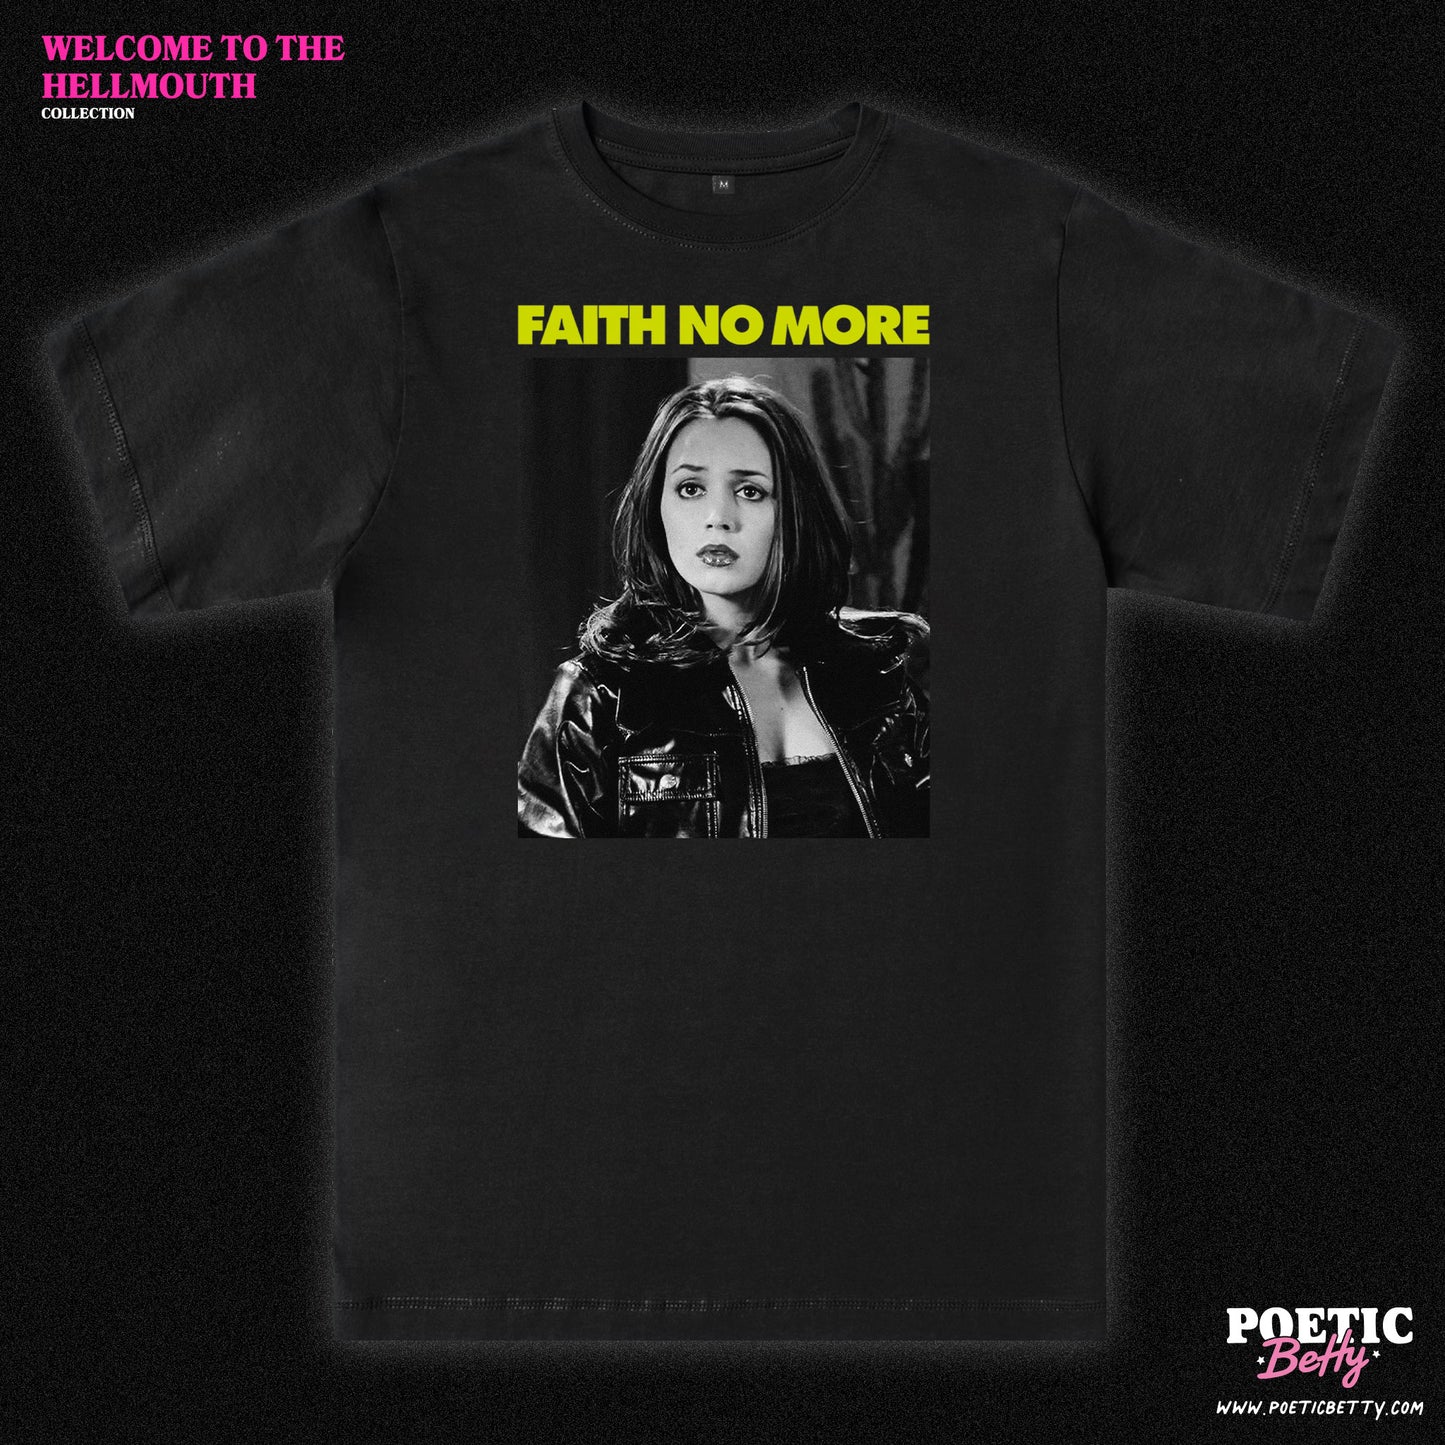 Faith Slayer Inspired Unisex Vintage T-Shirt